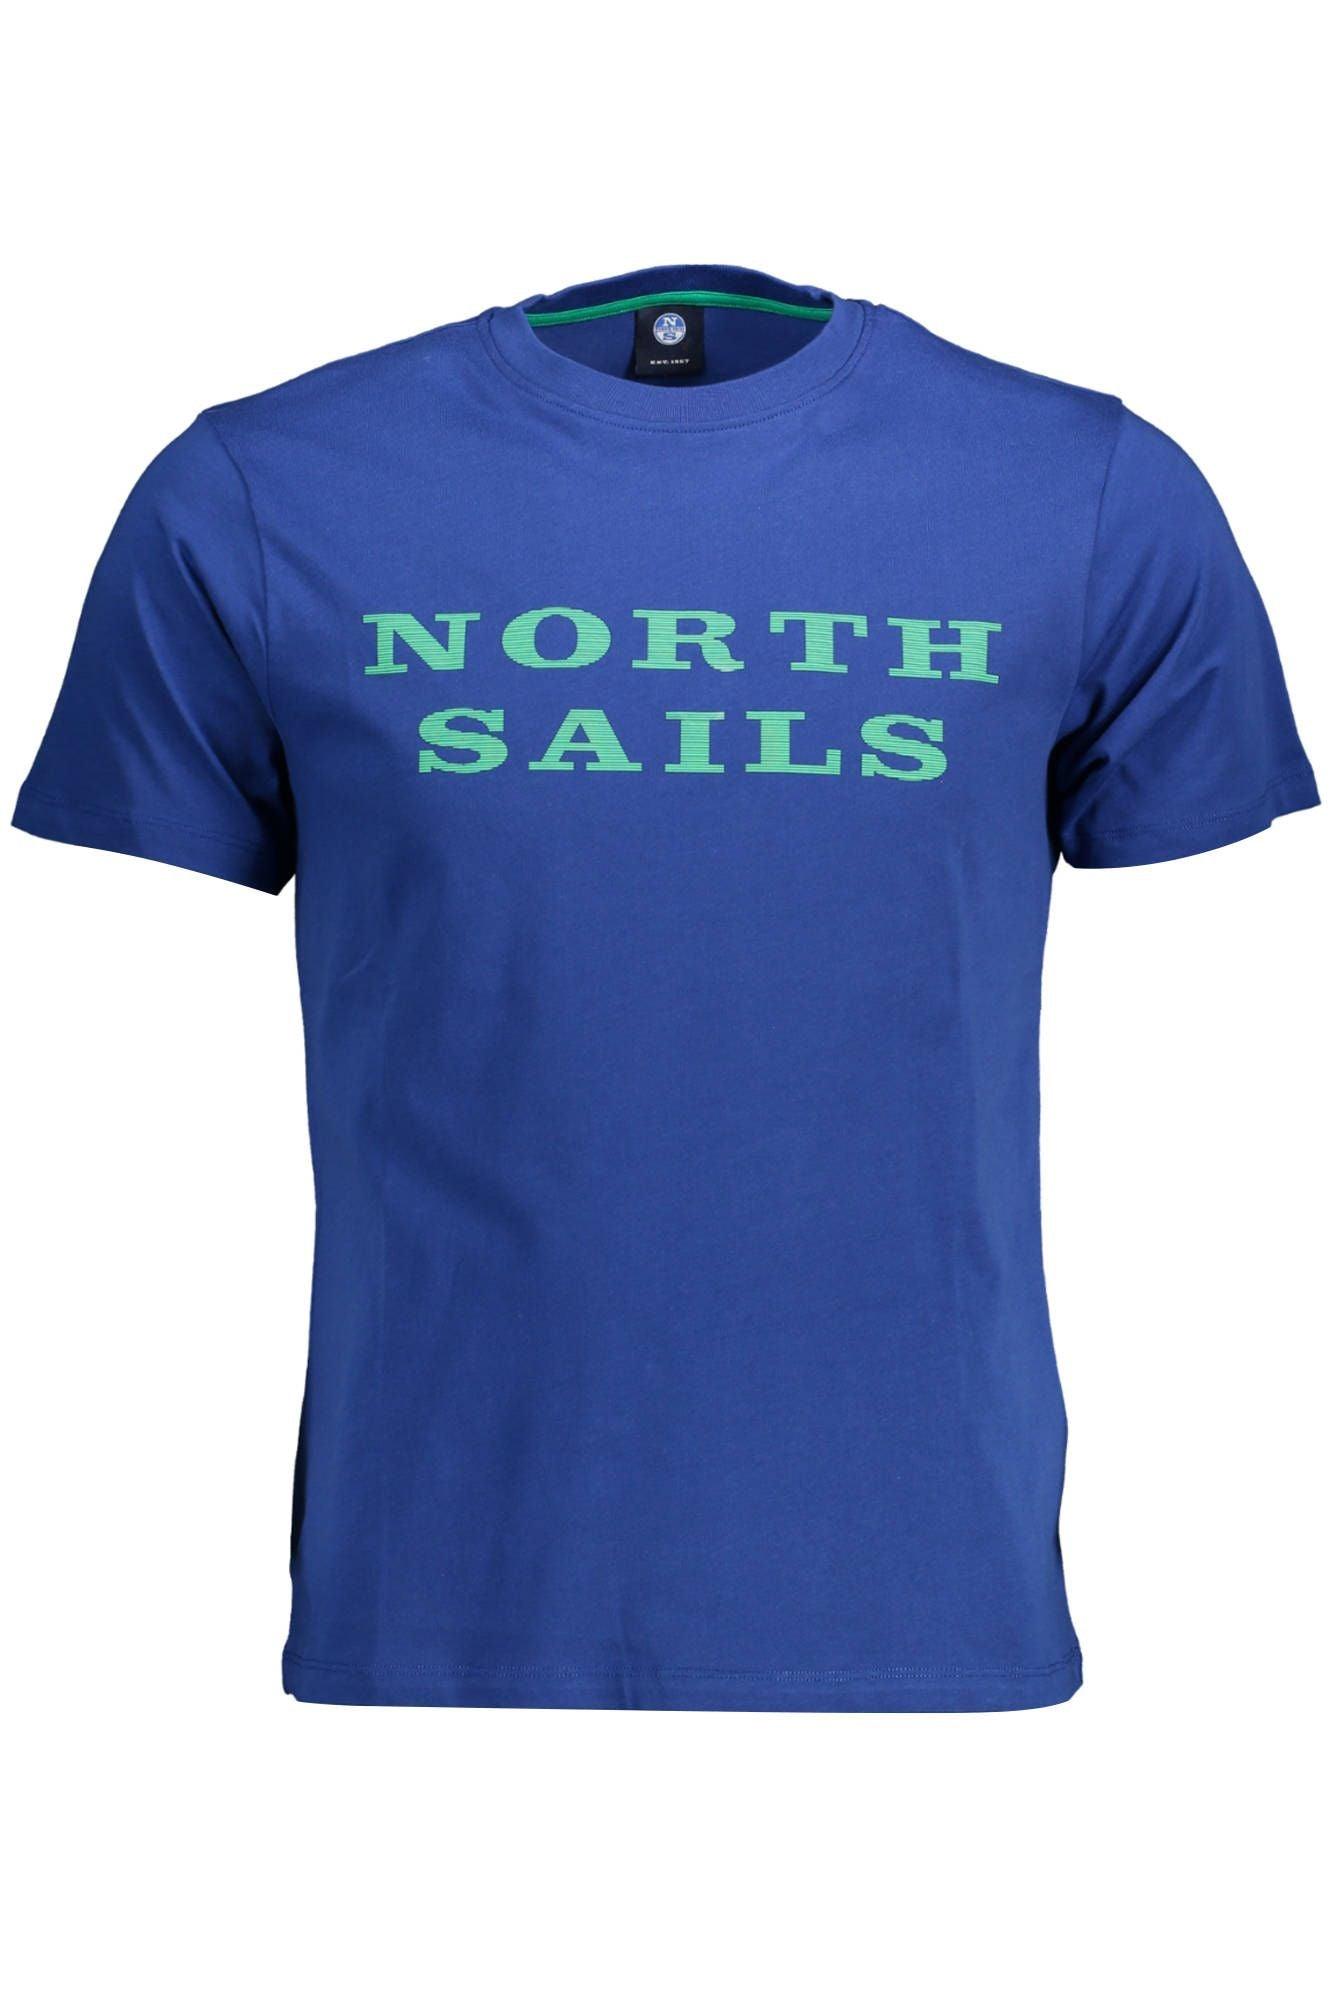 North Sails Chic Blue Print Round Neck Tee - Short Sleeves - PER.FASHION